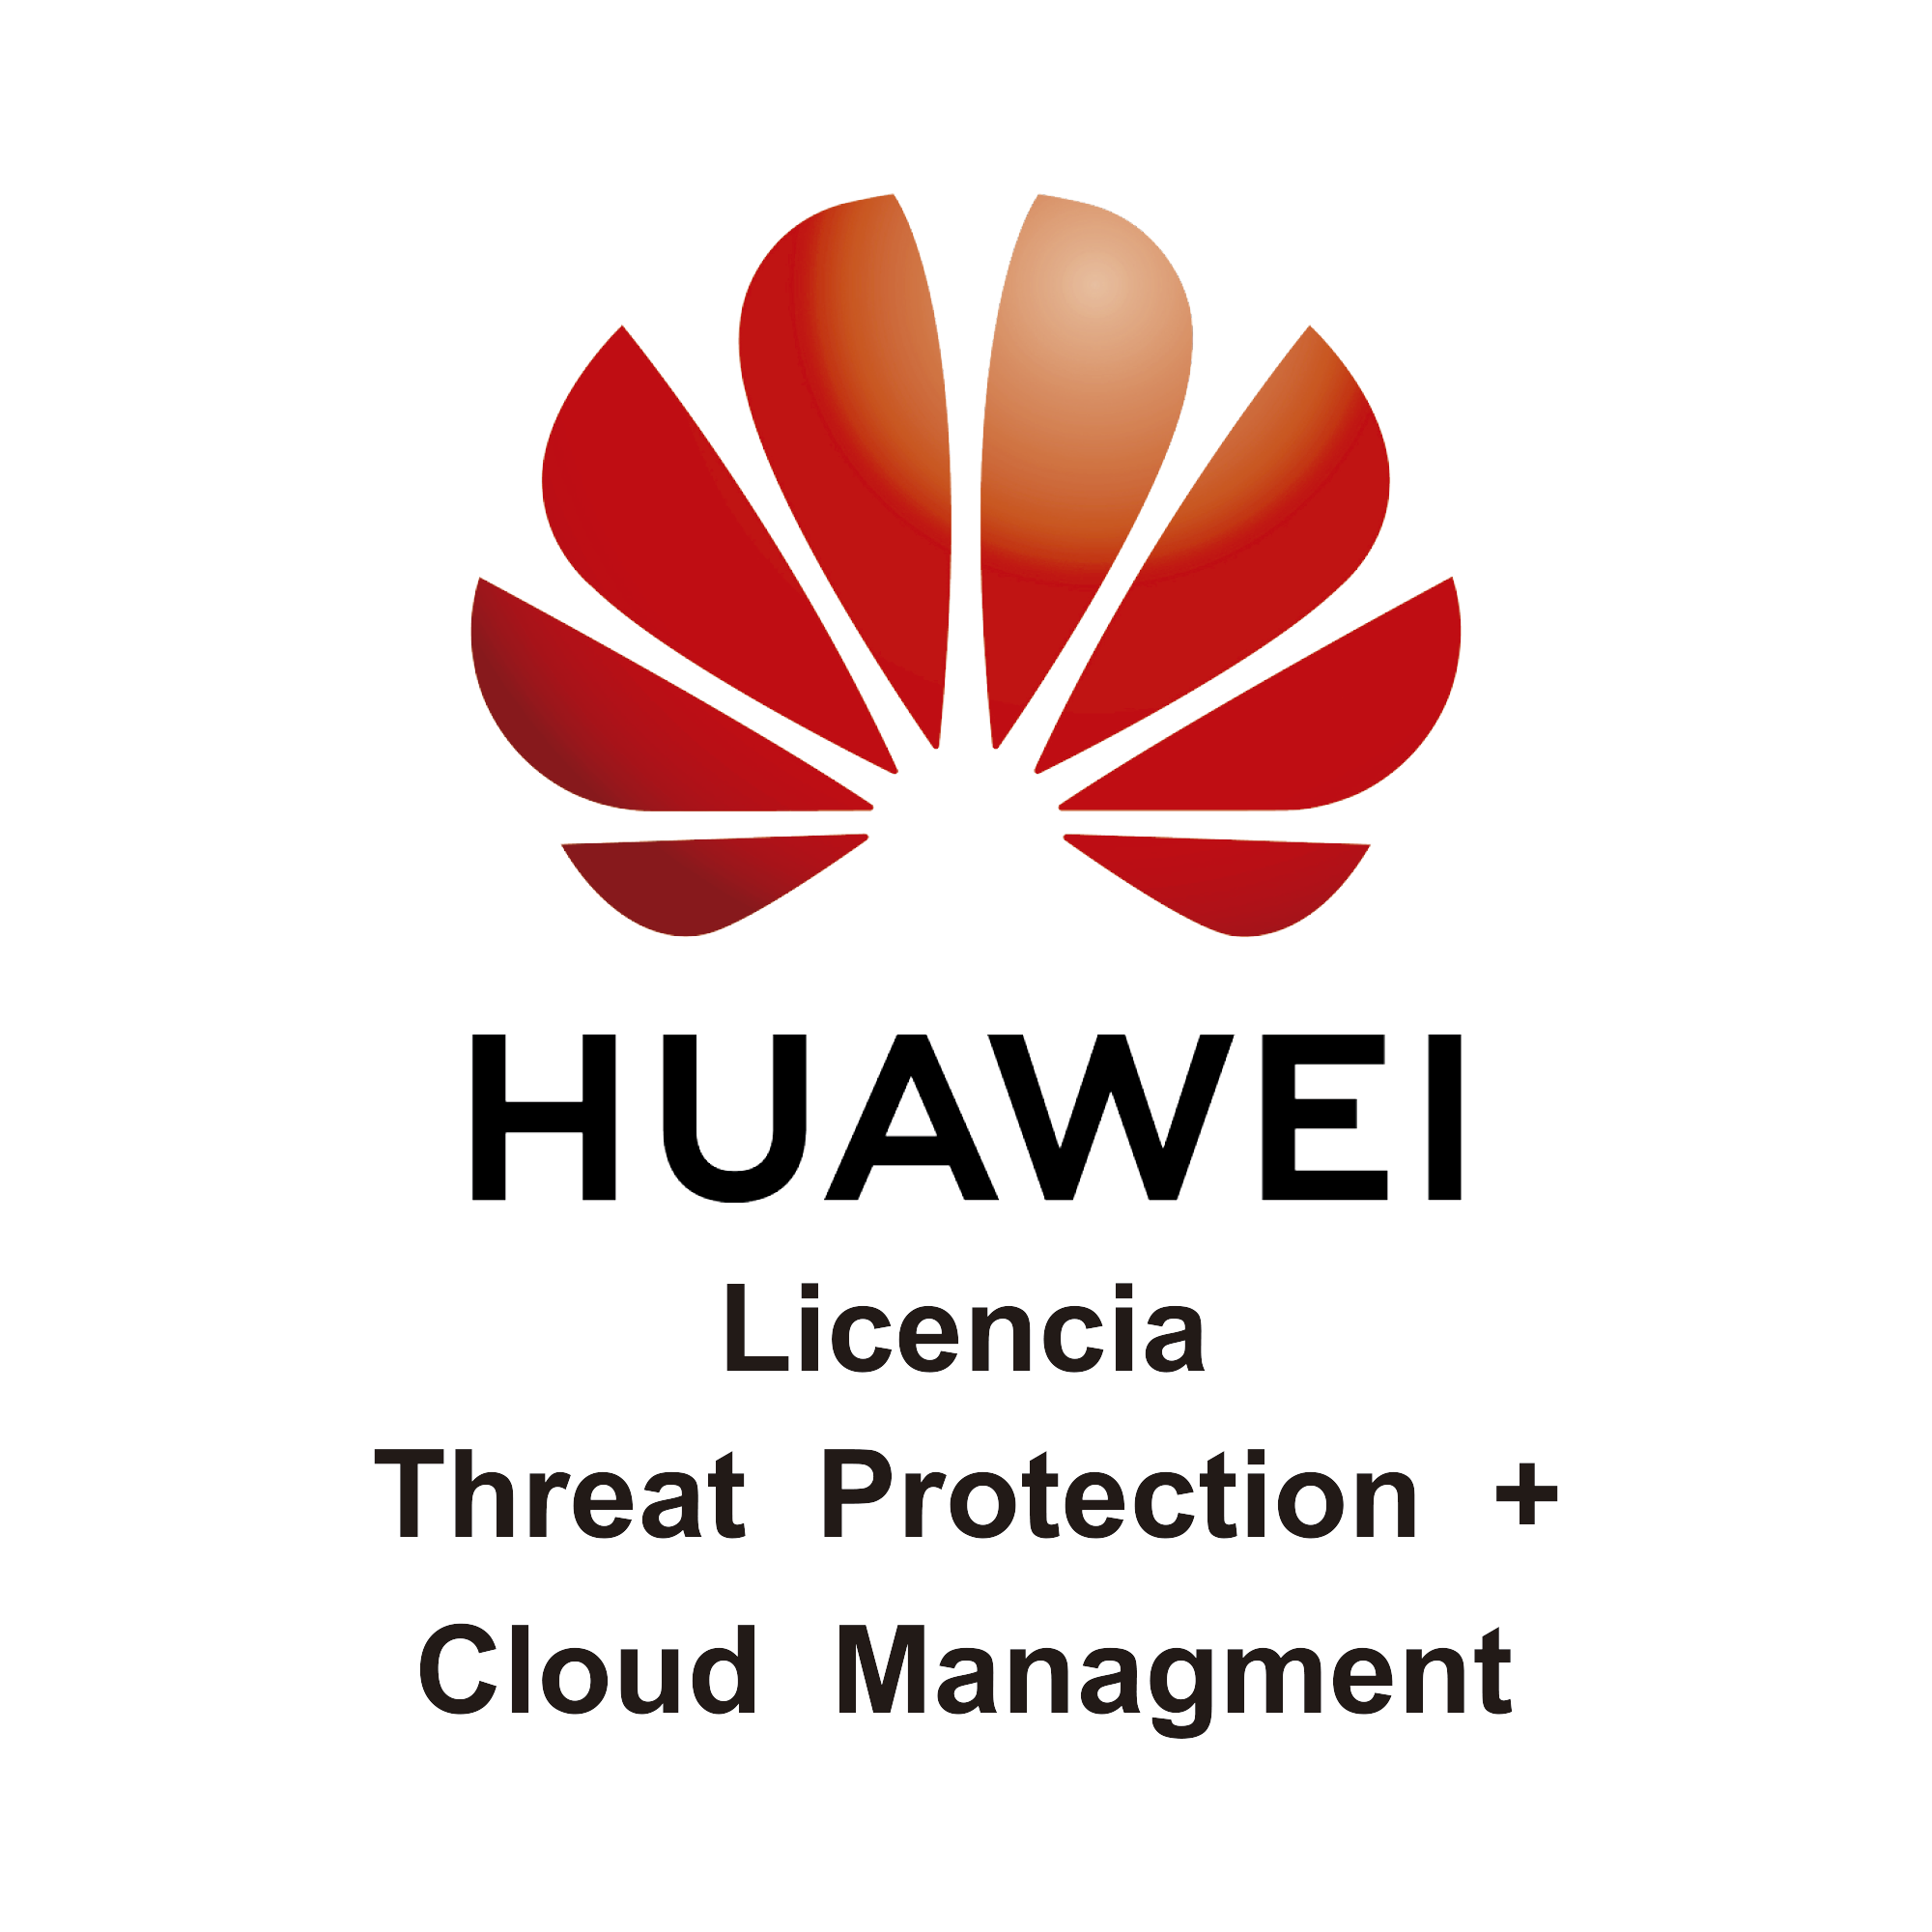 Licencia Threat Protection y Cloud Management para Firewall USG6530E por 5 años <br>  <strong>Código SAT:</strong> 43222501 - LIC-USG6530E-5Y